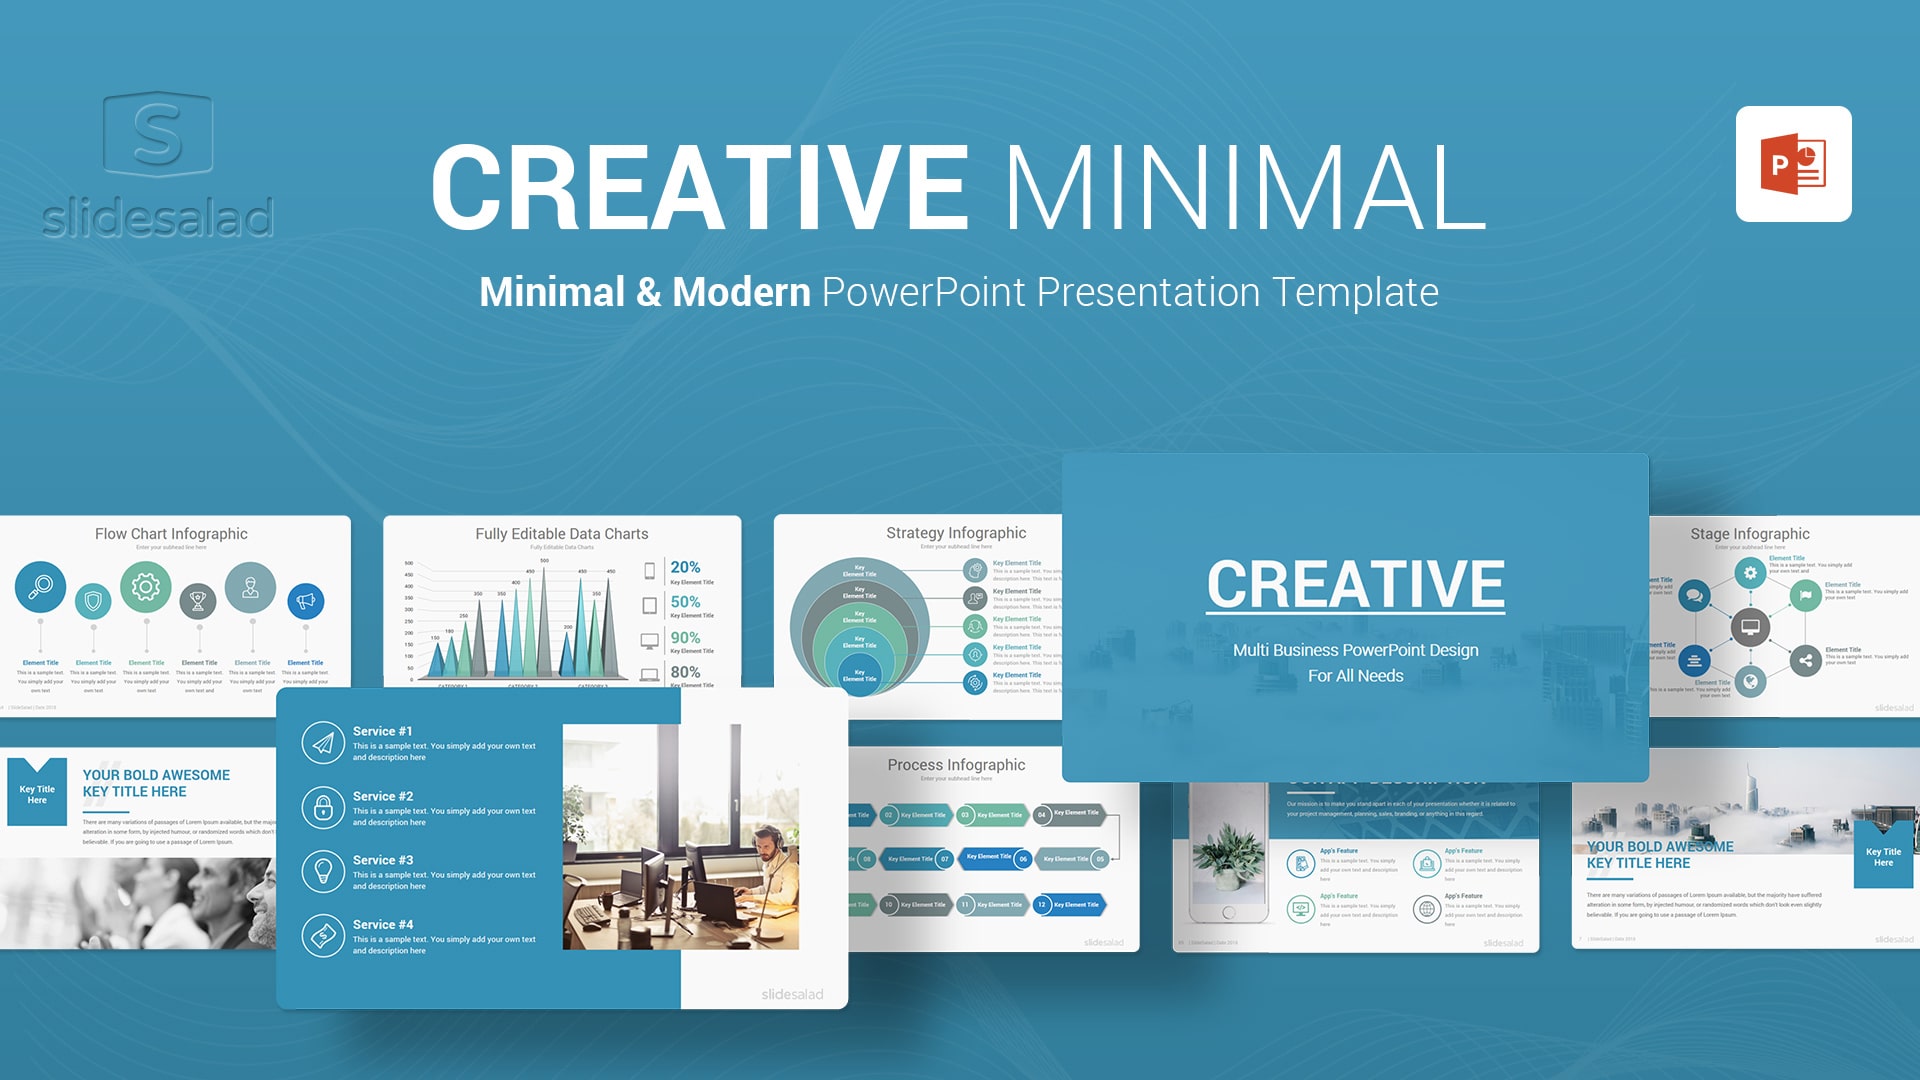 Creative Business PowerPoint Templates - Digital Webinar PowerPoint Templates